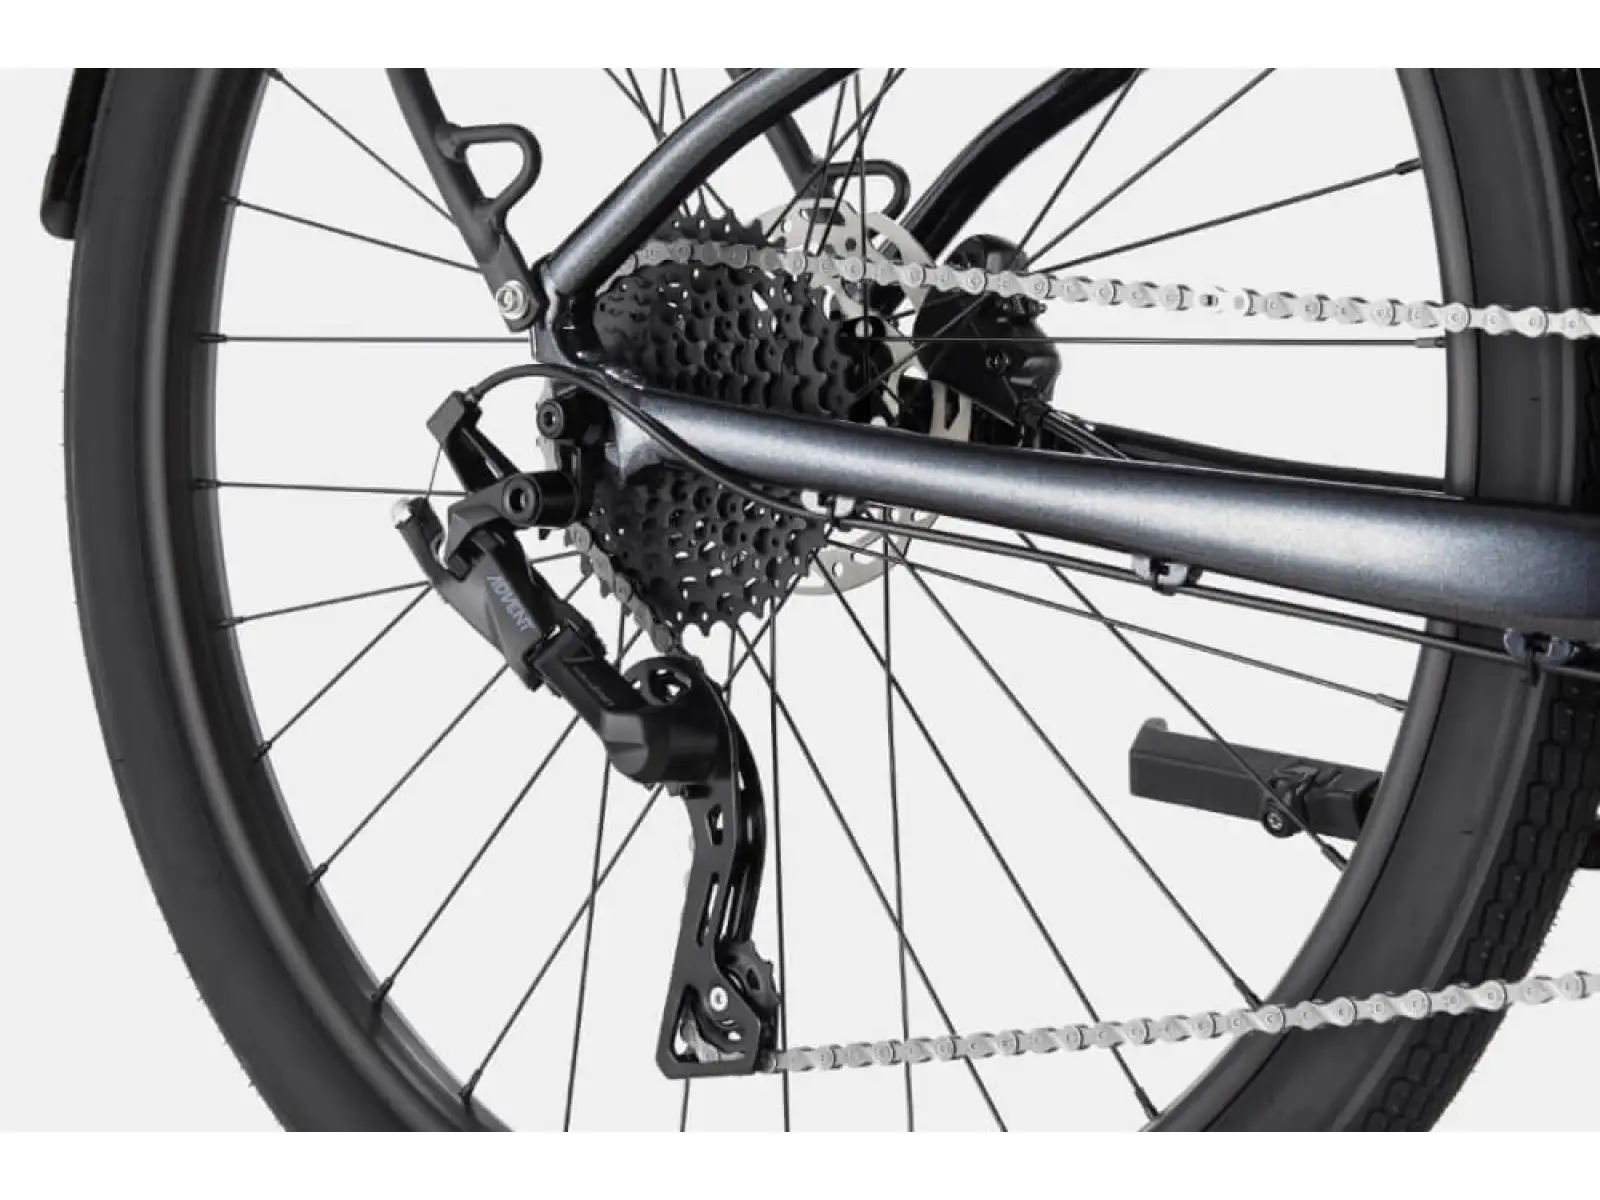 Cannondale Treadwell EQ Remixte ALP fitness bicykel